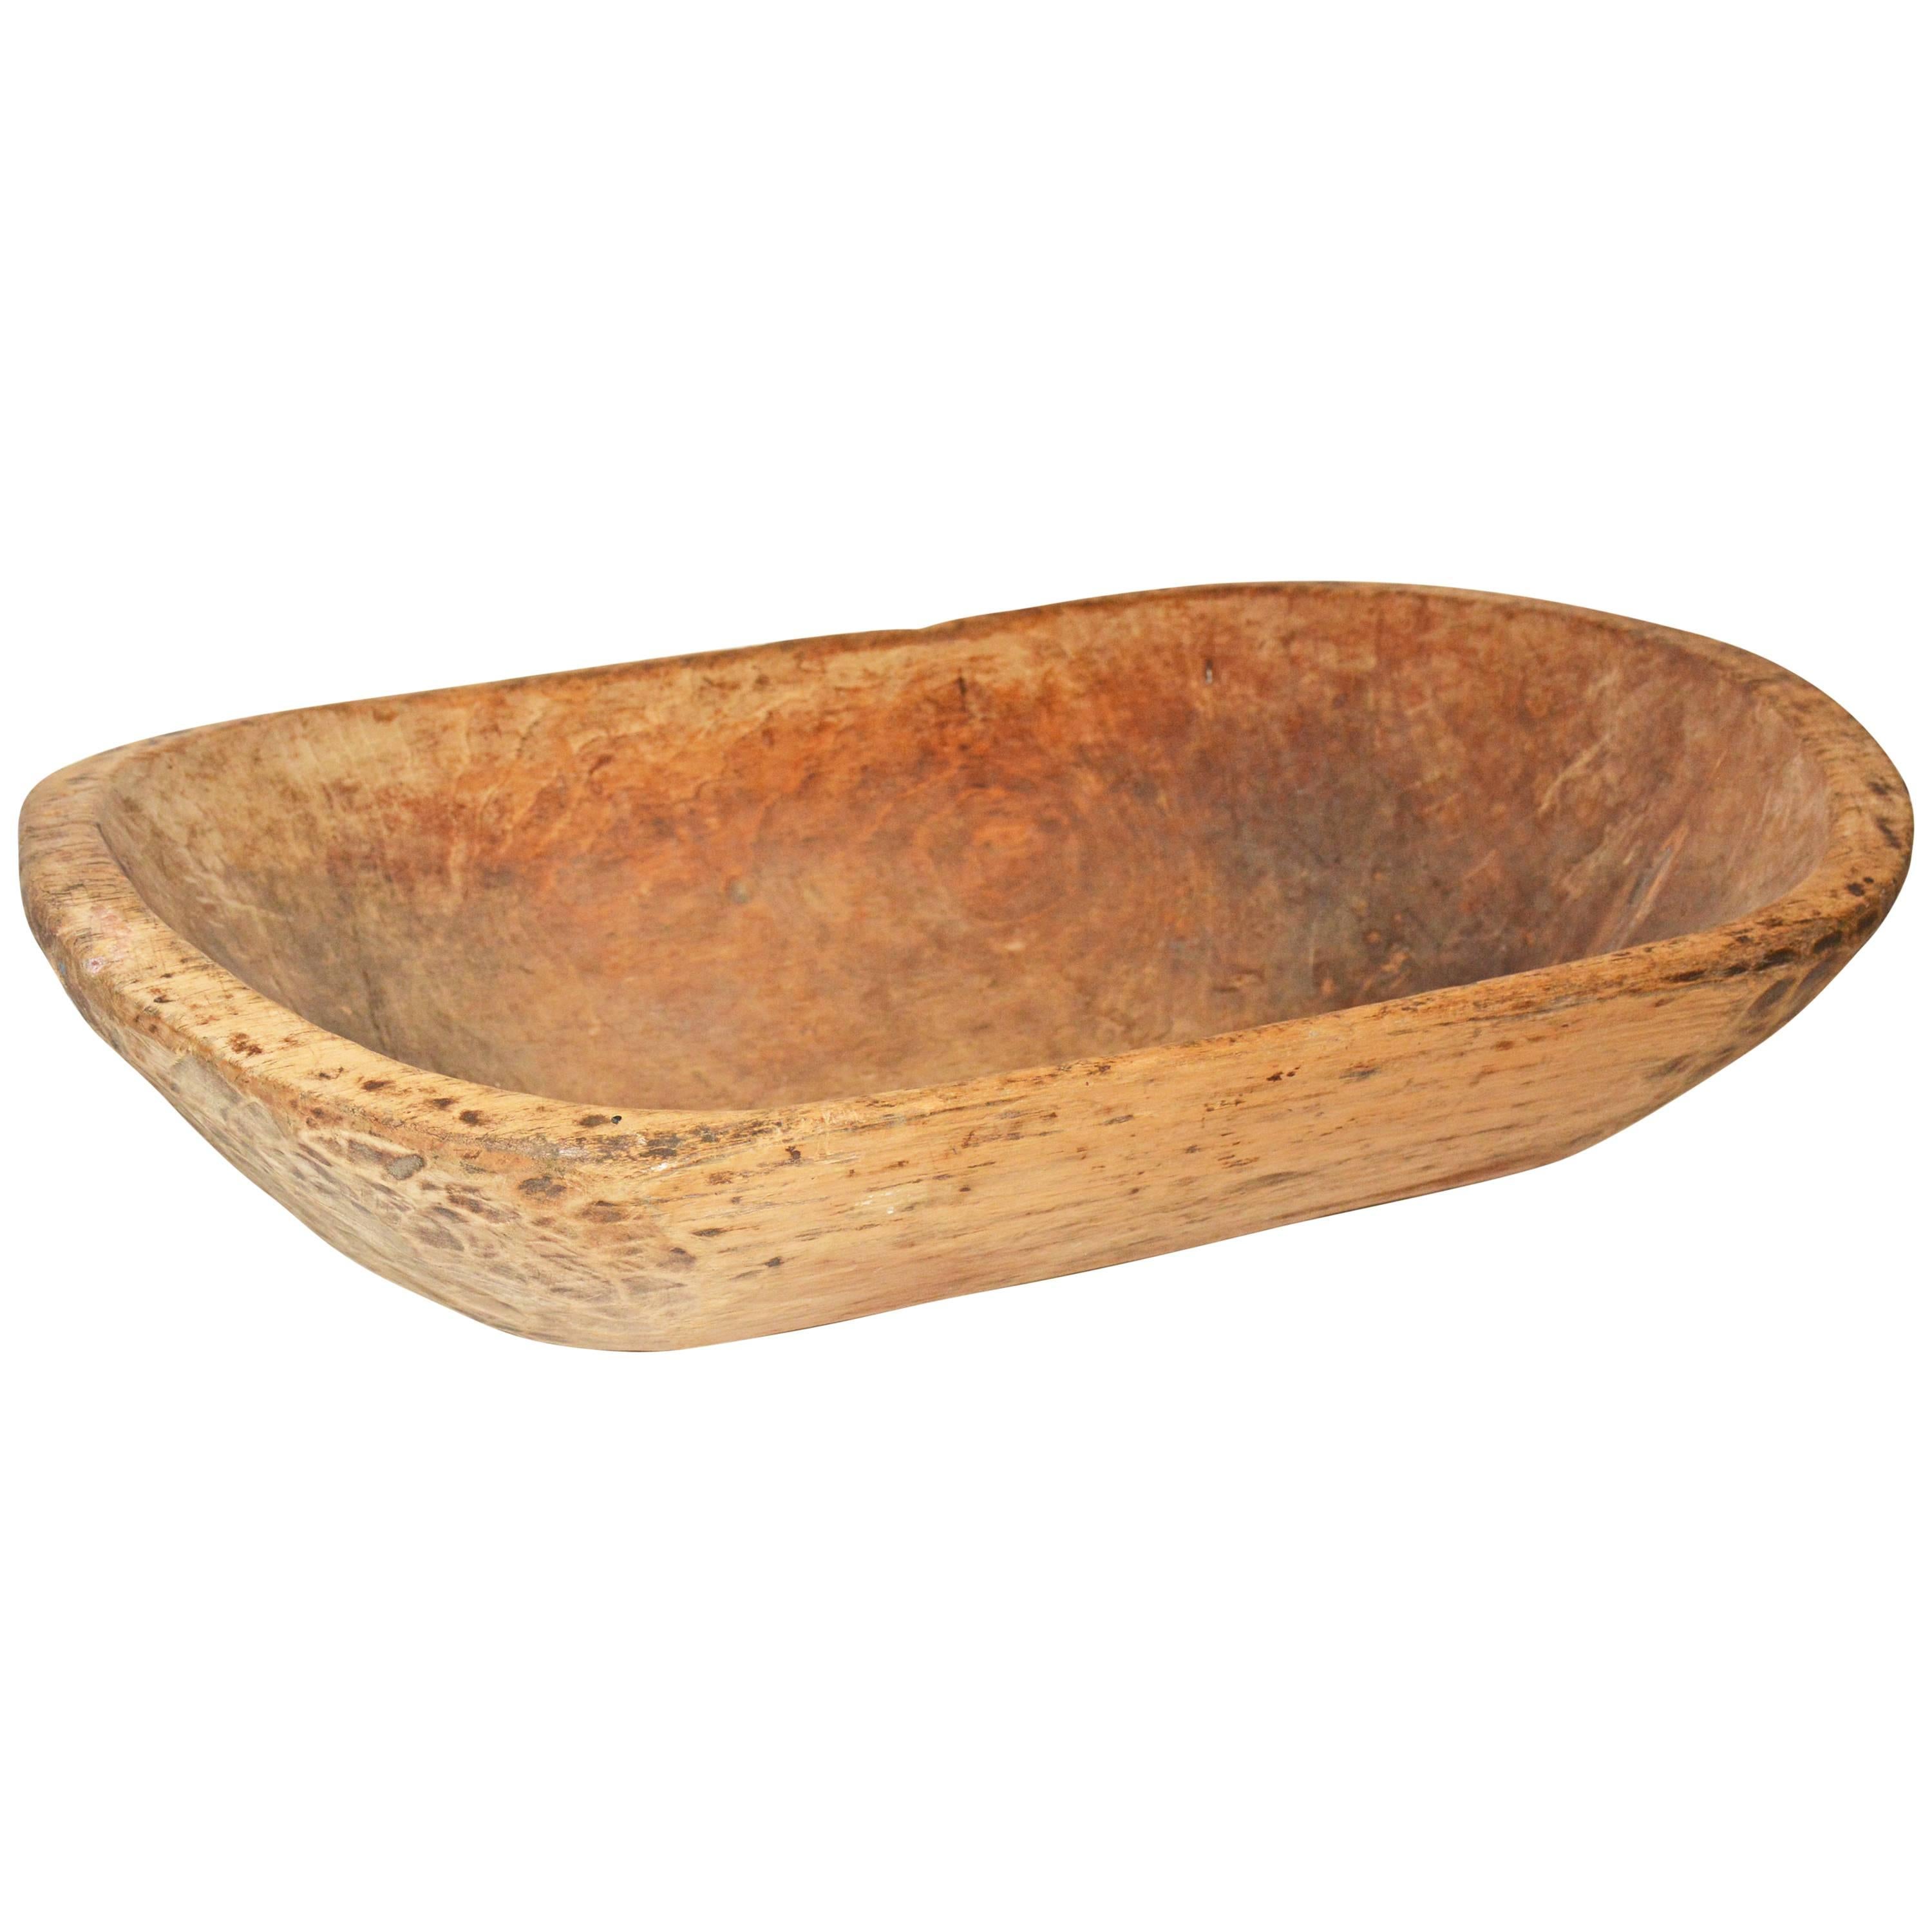 Elongated Oval Wood Dough Bowl